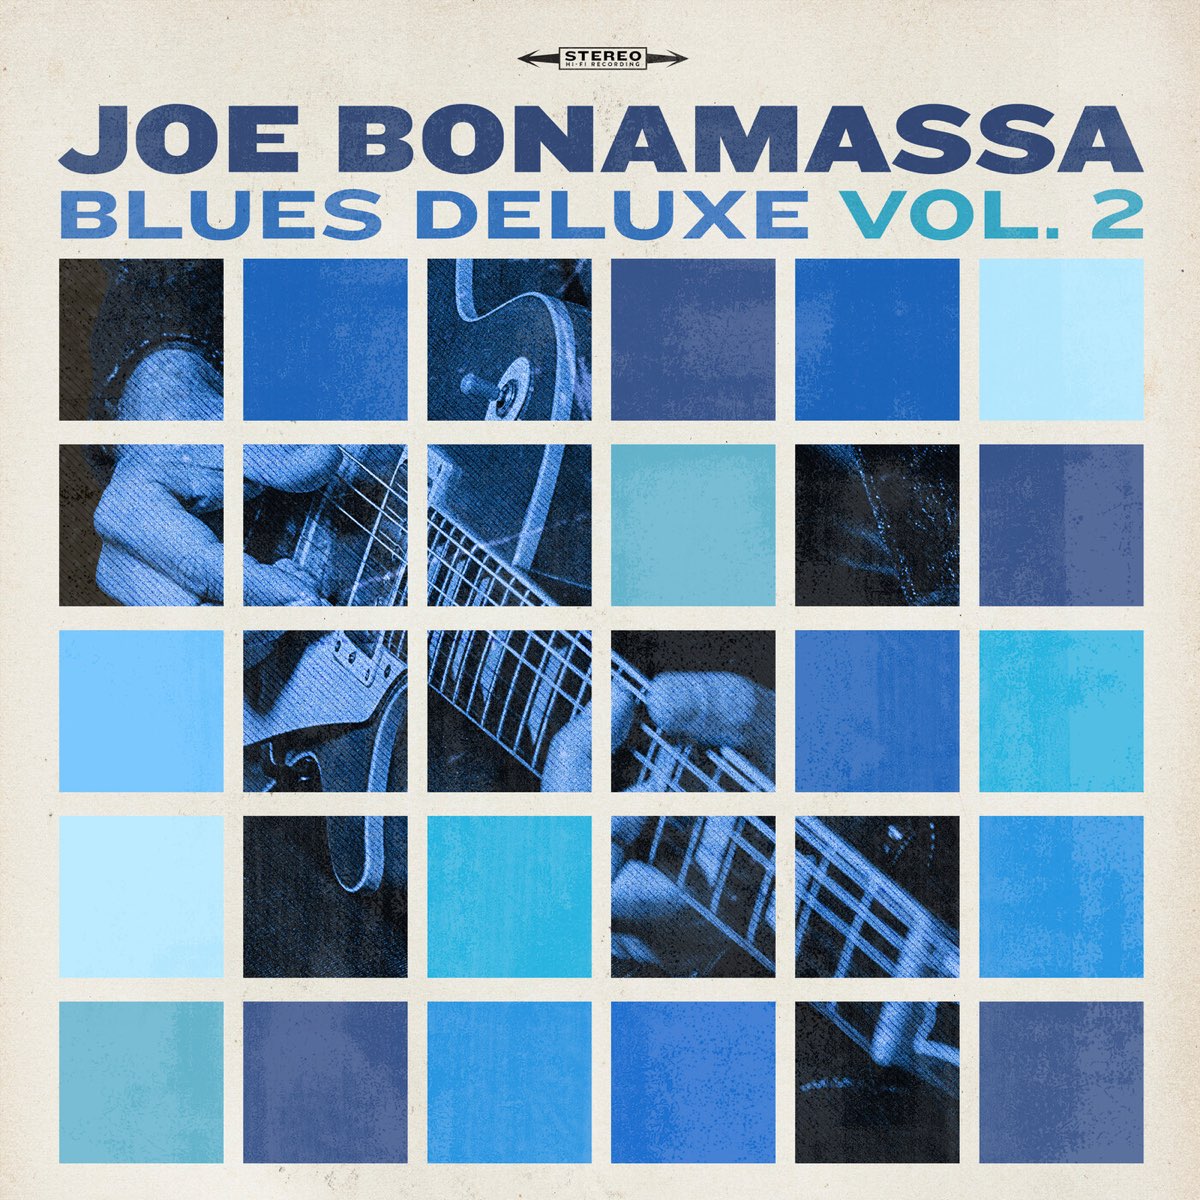 ‎Blues Deluxe Vol. 2 - Album by Joe Bonamassa - Apple Music